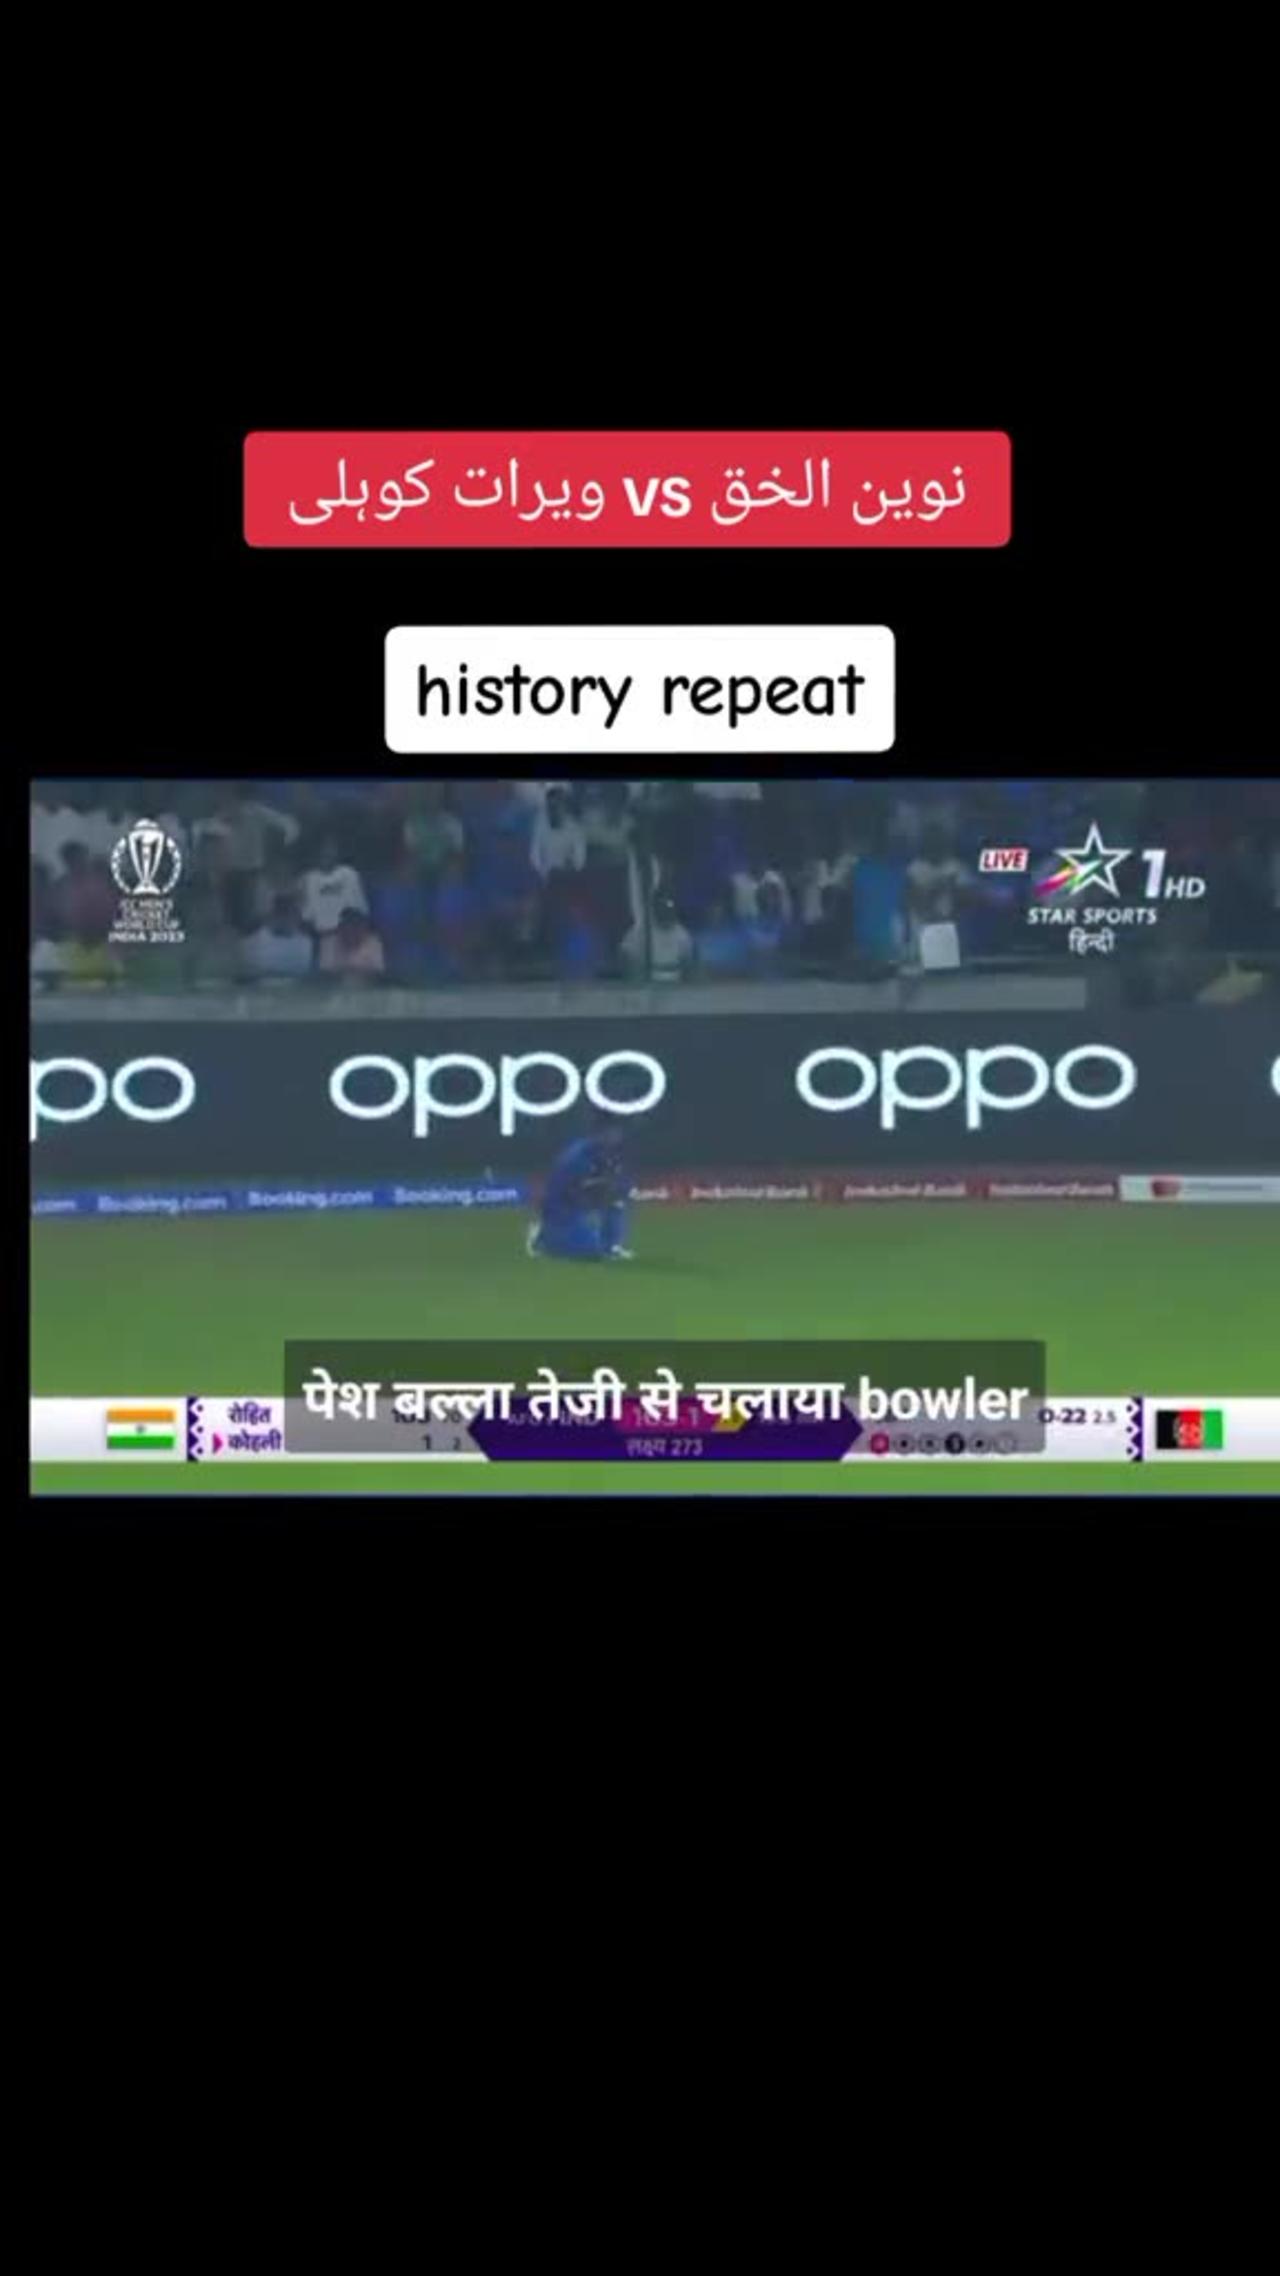 History repeat: Virat kholi vs Naveen ul haq fight